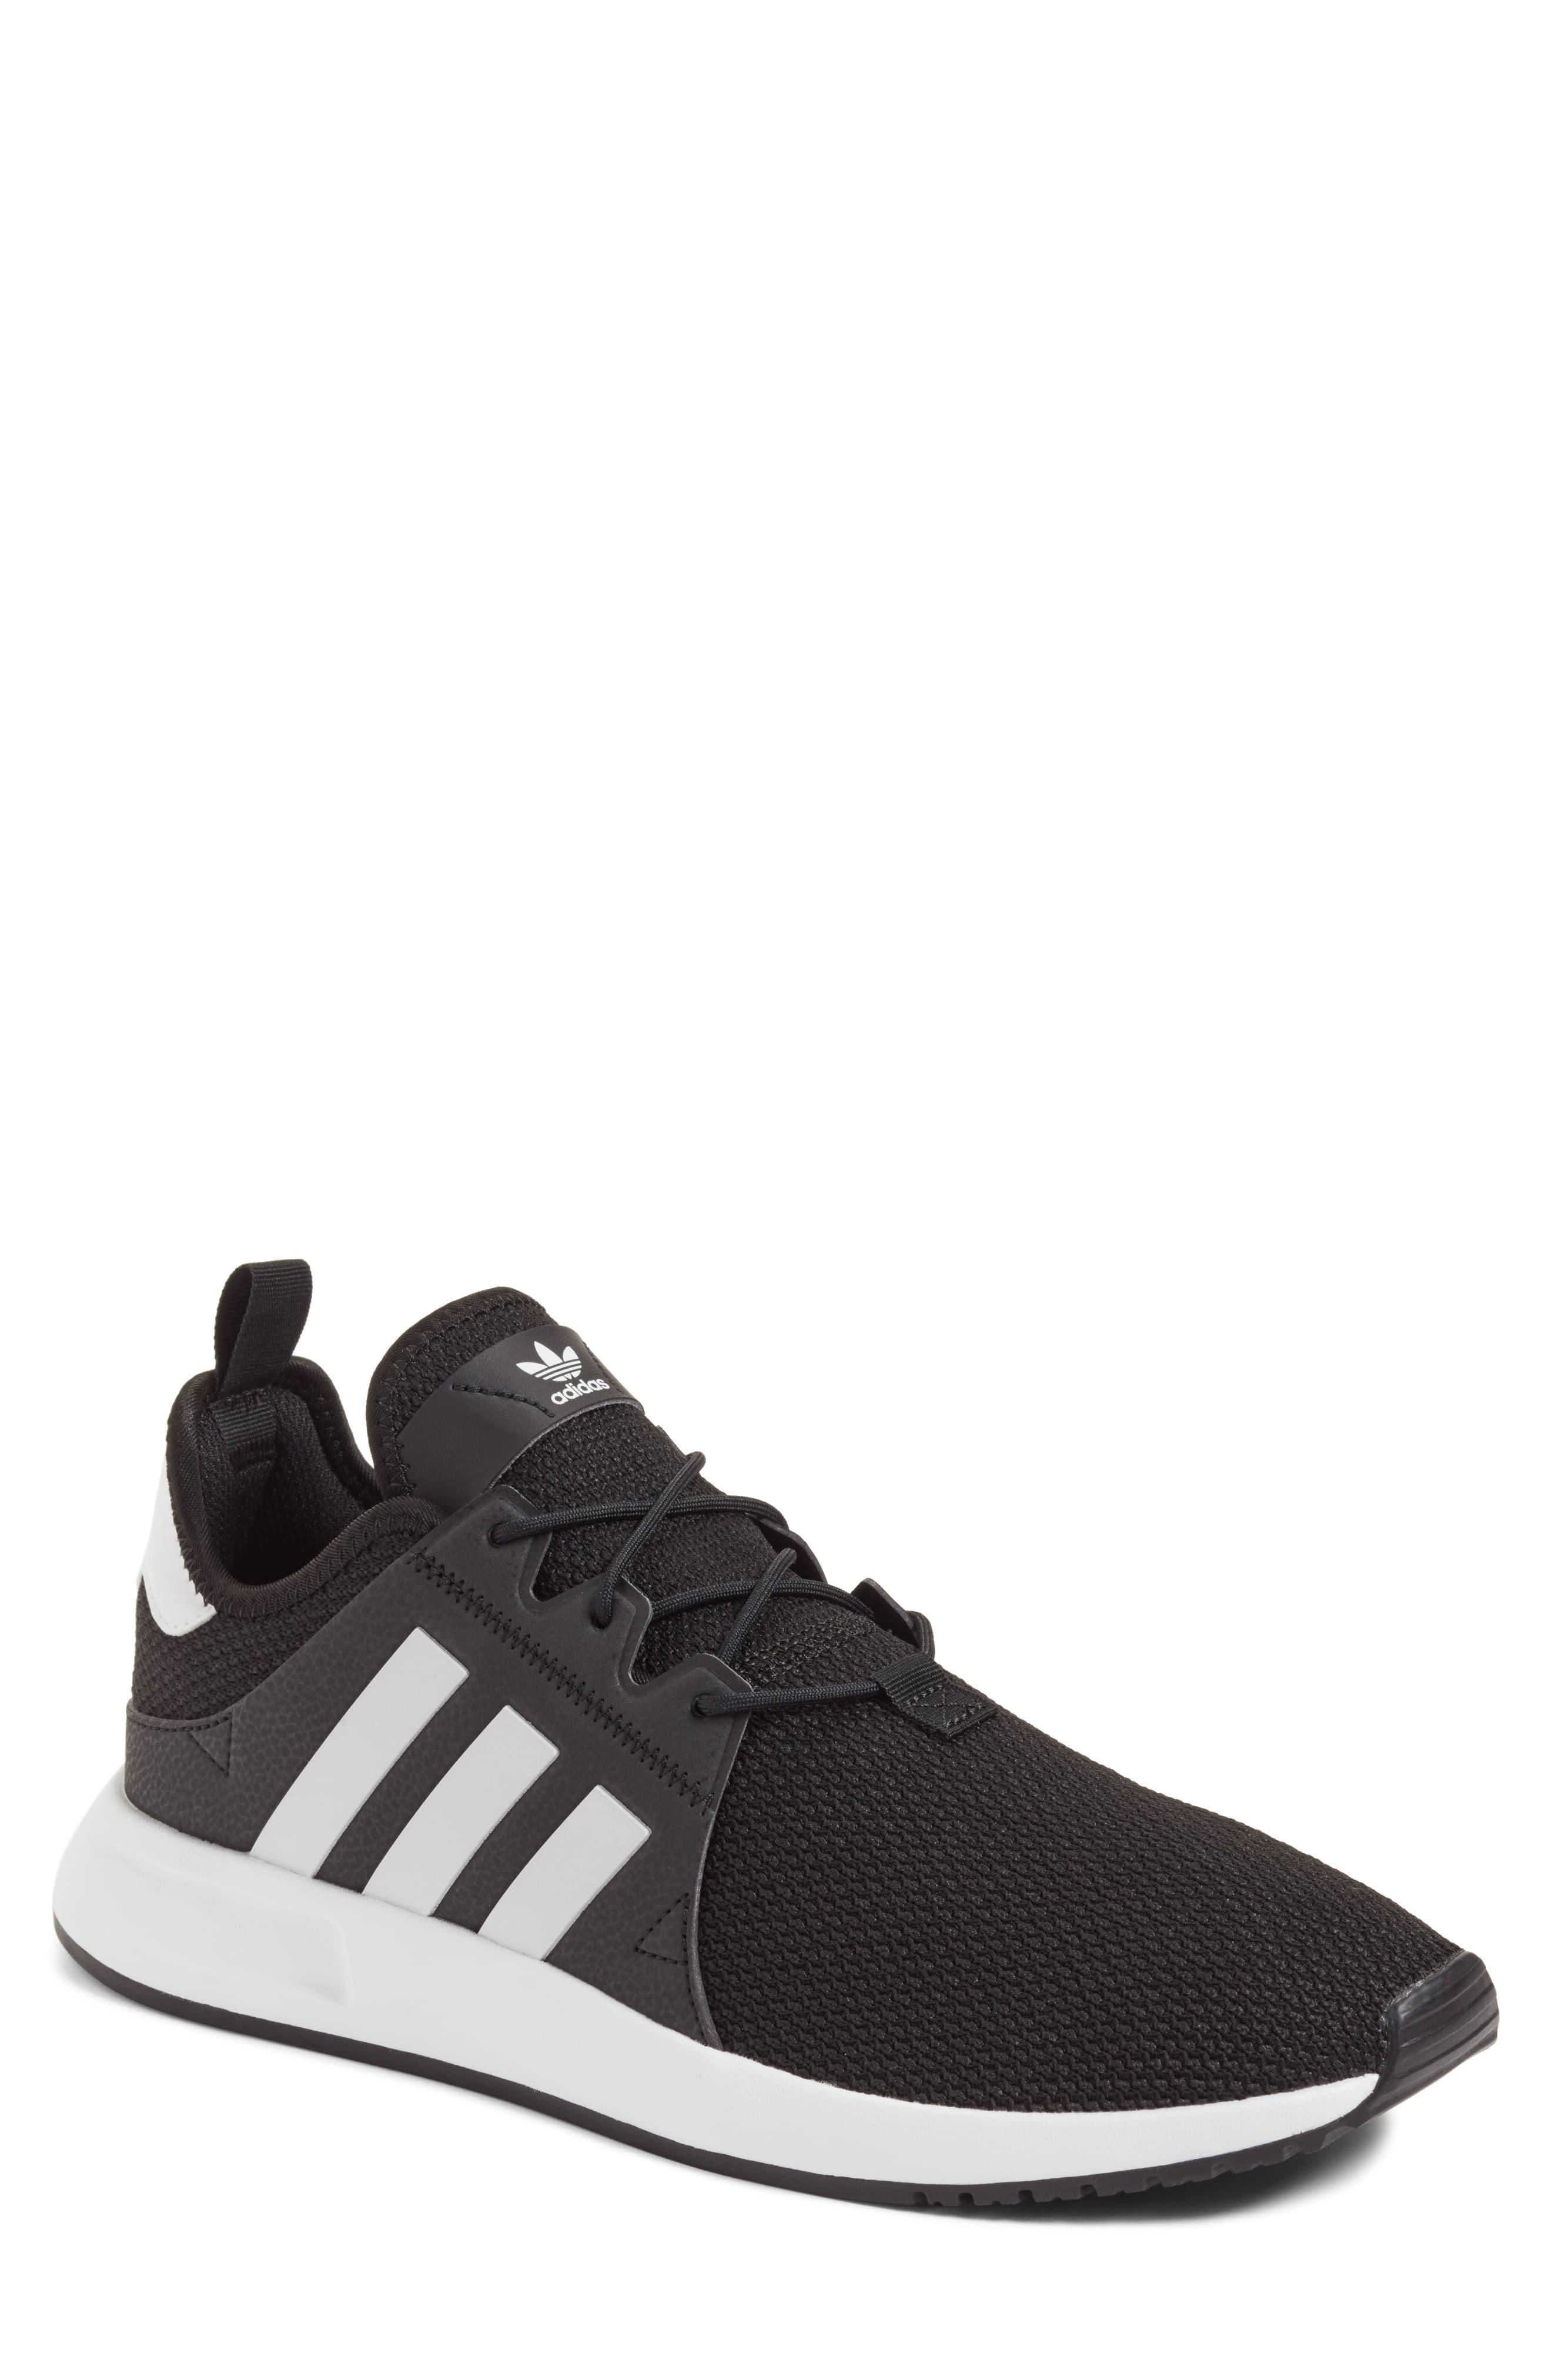 adidas X_plr Sneaker in Black/ White/ Black (Black) for Men - Save 29% ...